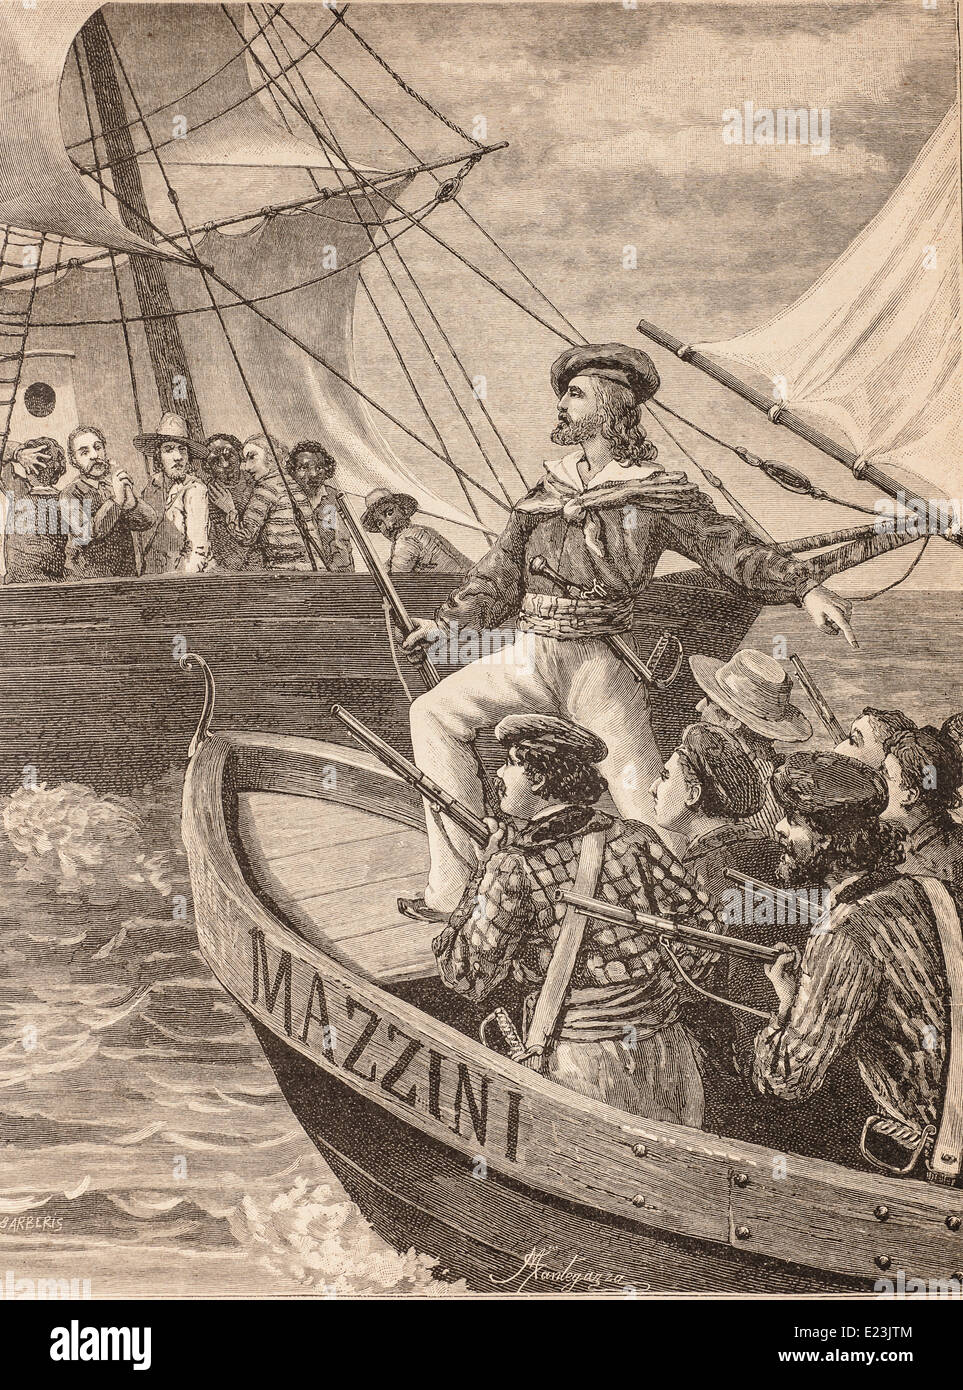 Giuseppe Mazzini From the Book of Jessie W. Mario of Life of Mazzini. Garibaldi attacks a imperial brig Stock Photo